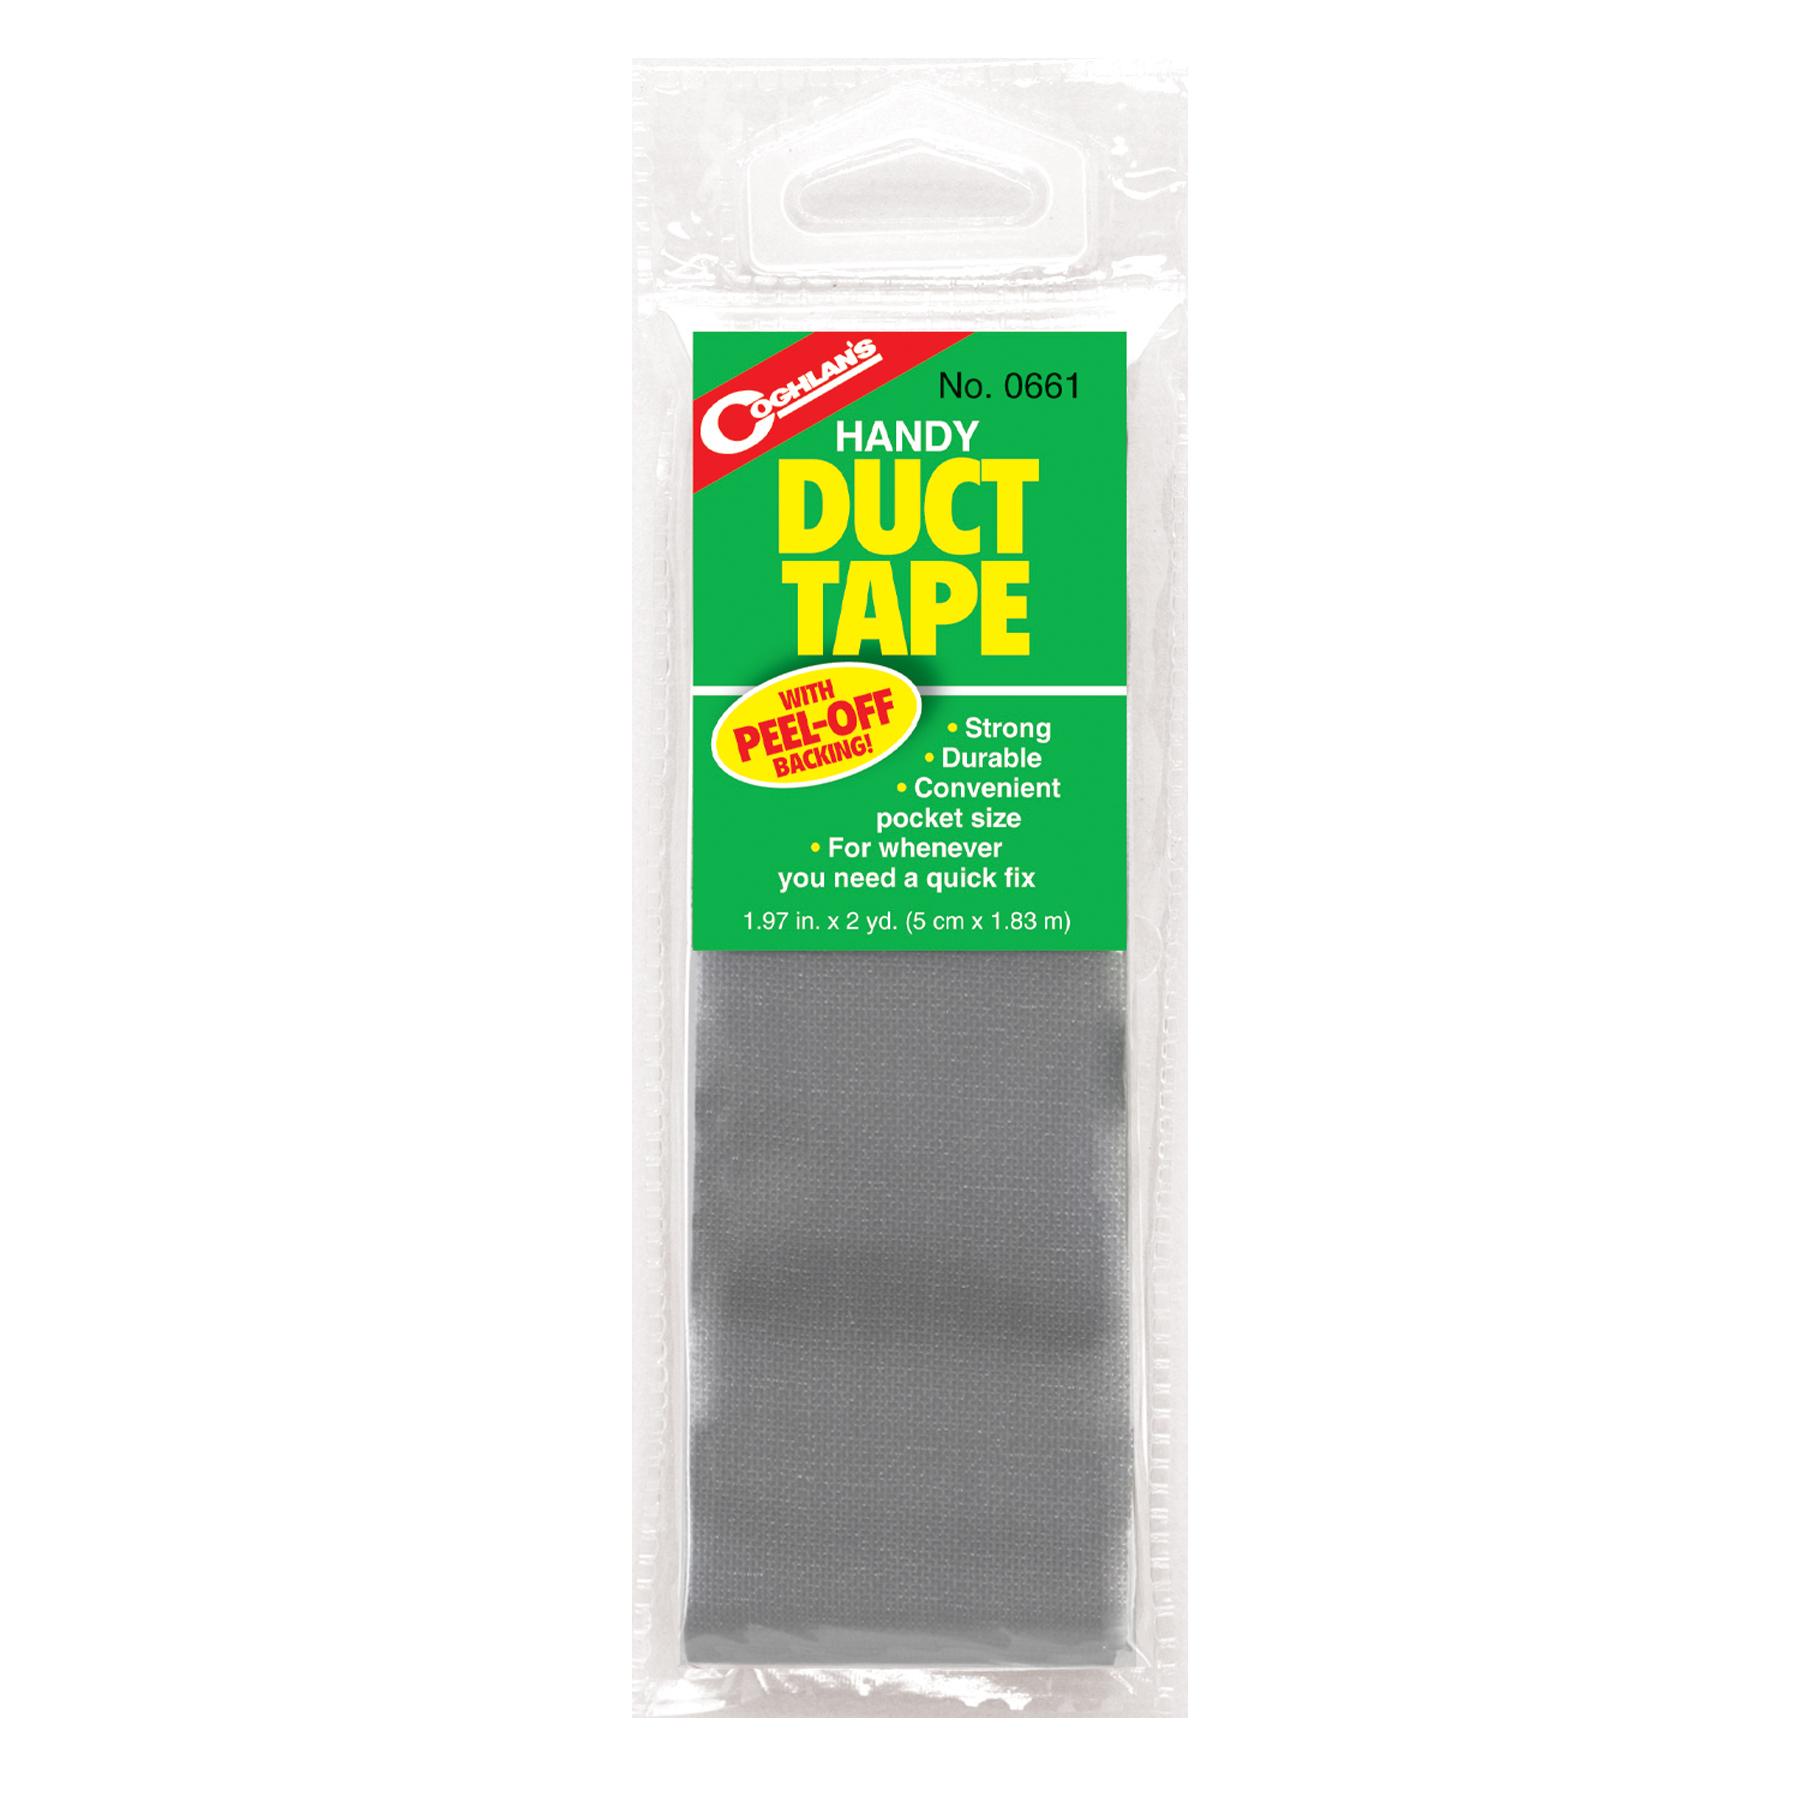  Handy Duct Tape